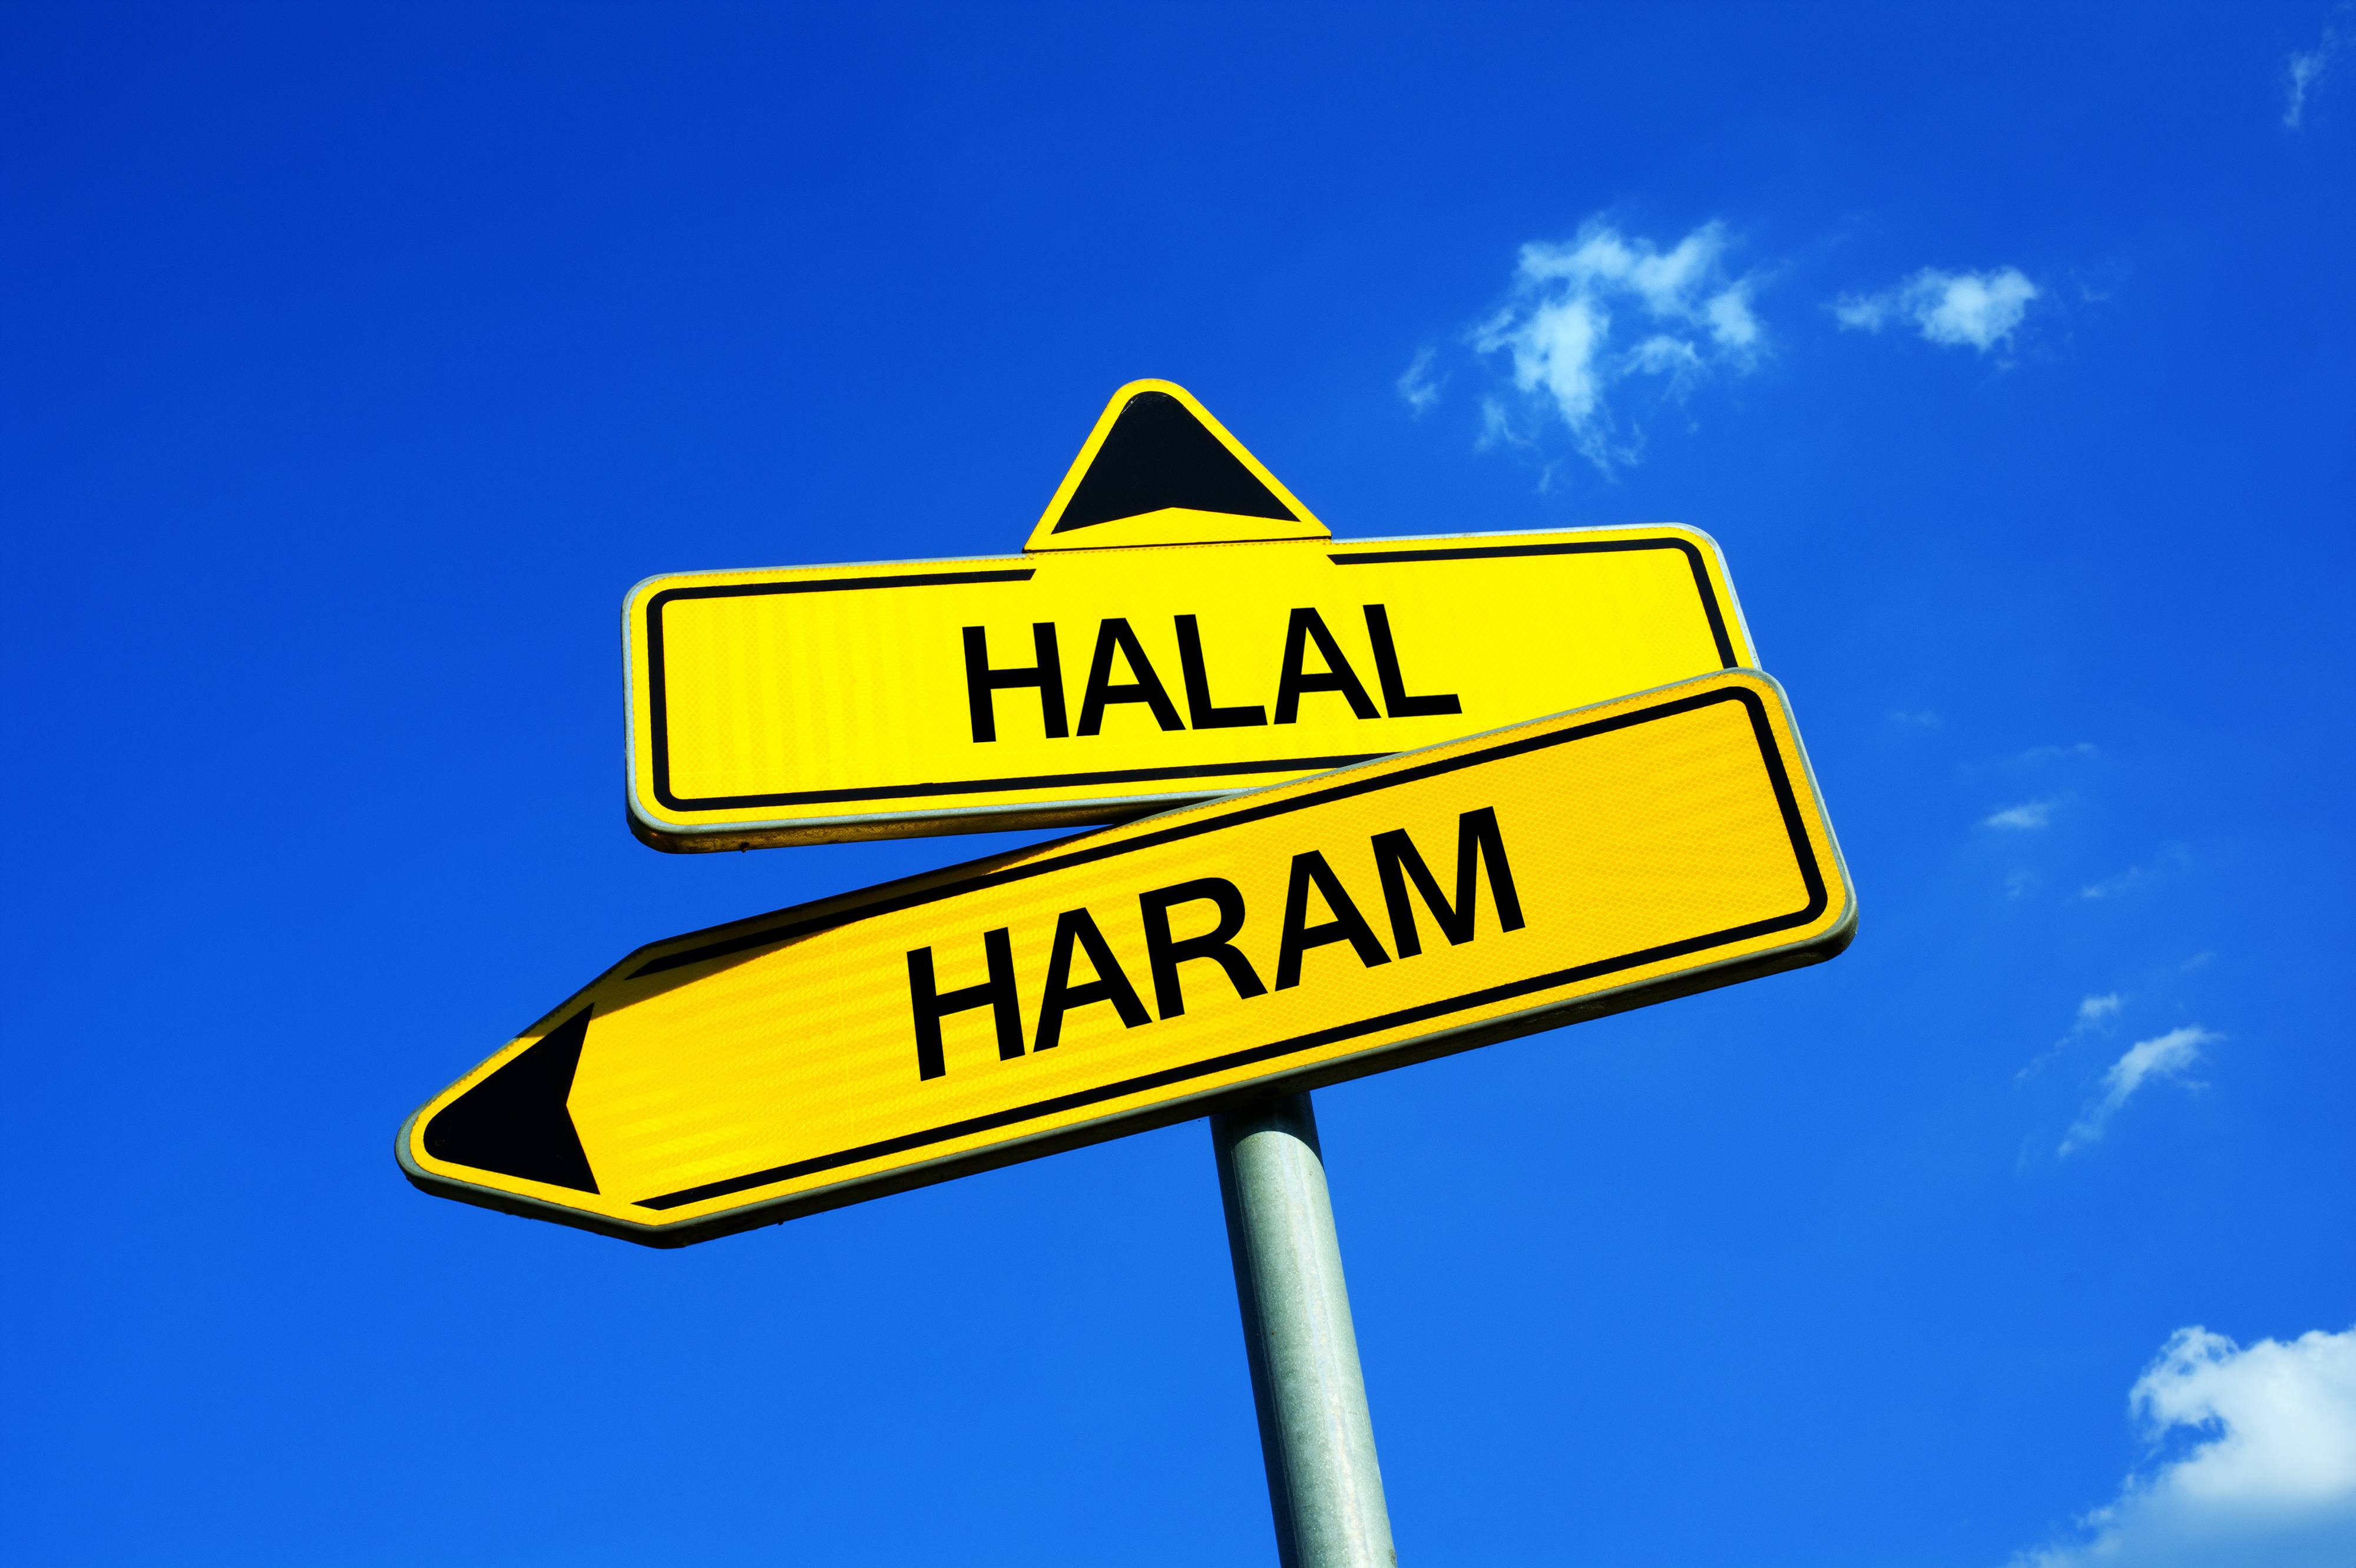 What is halal? What is haram? We break it down